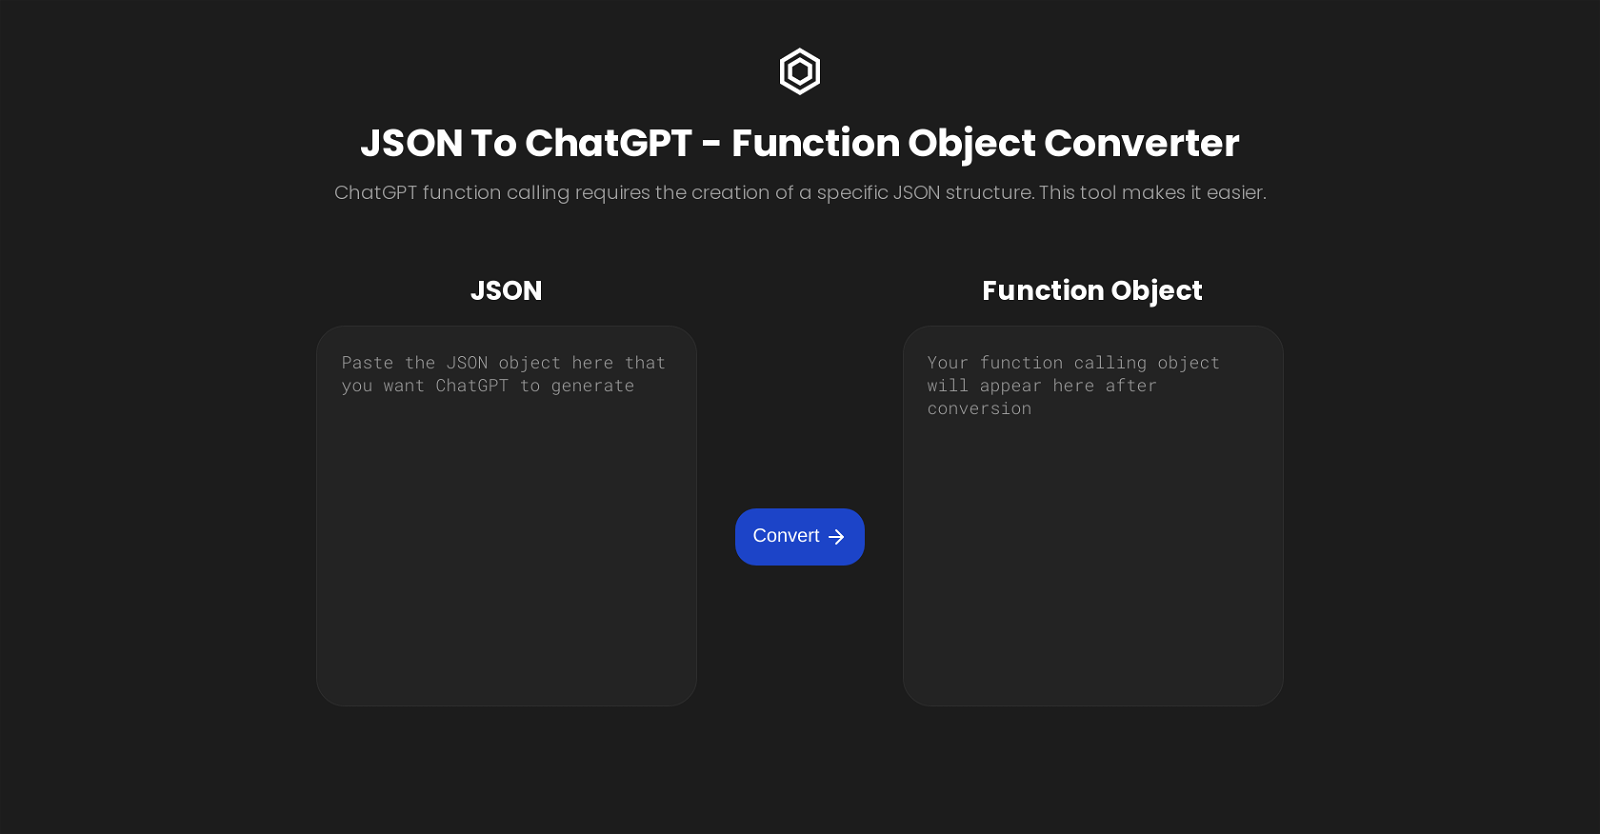 JSON To ChatGPT website